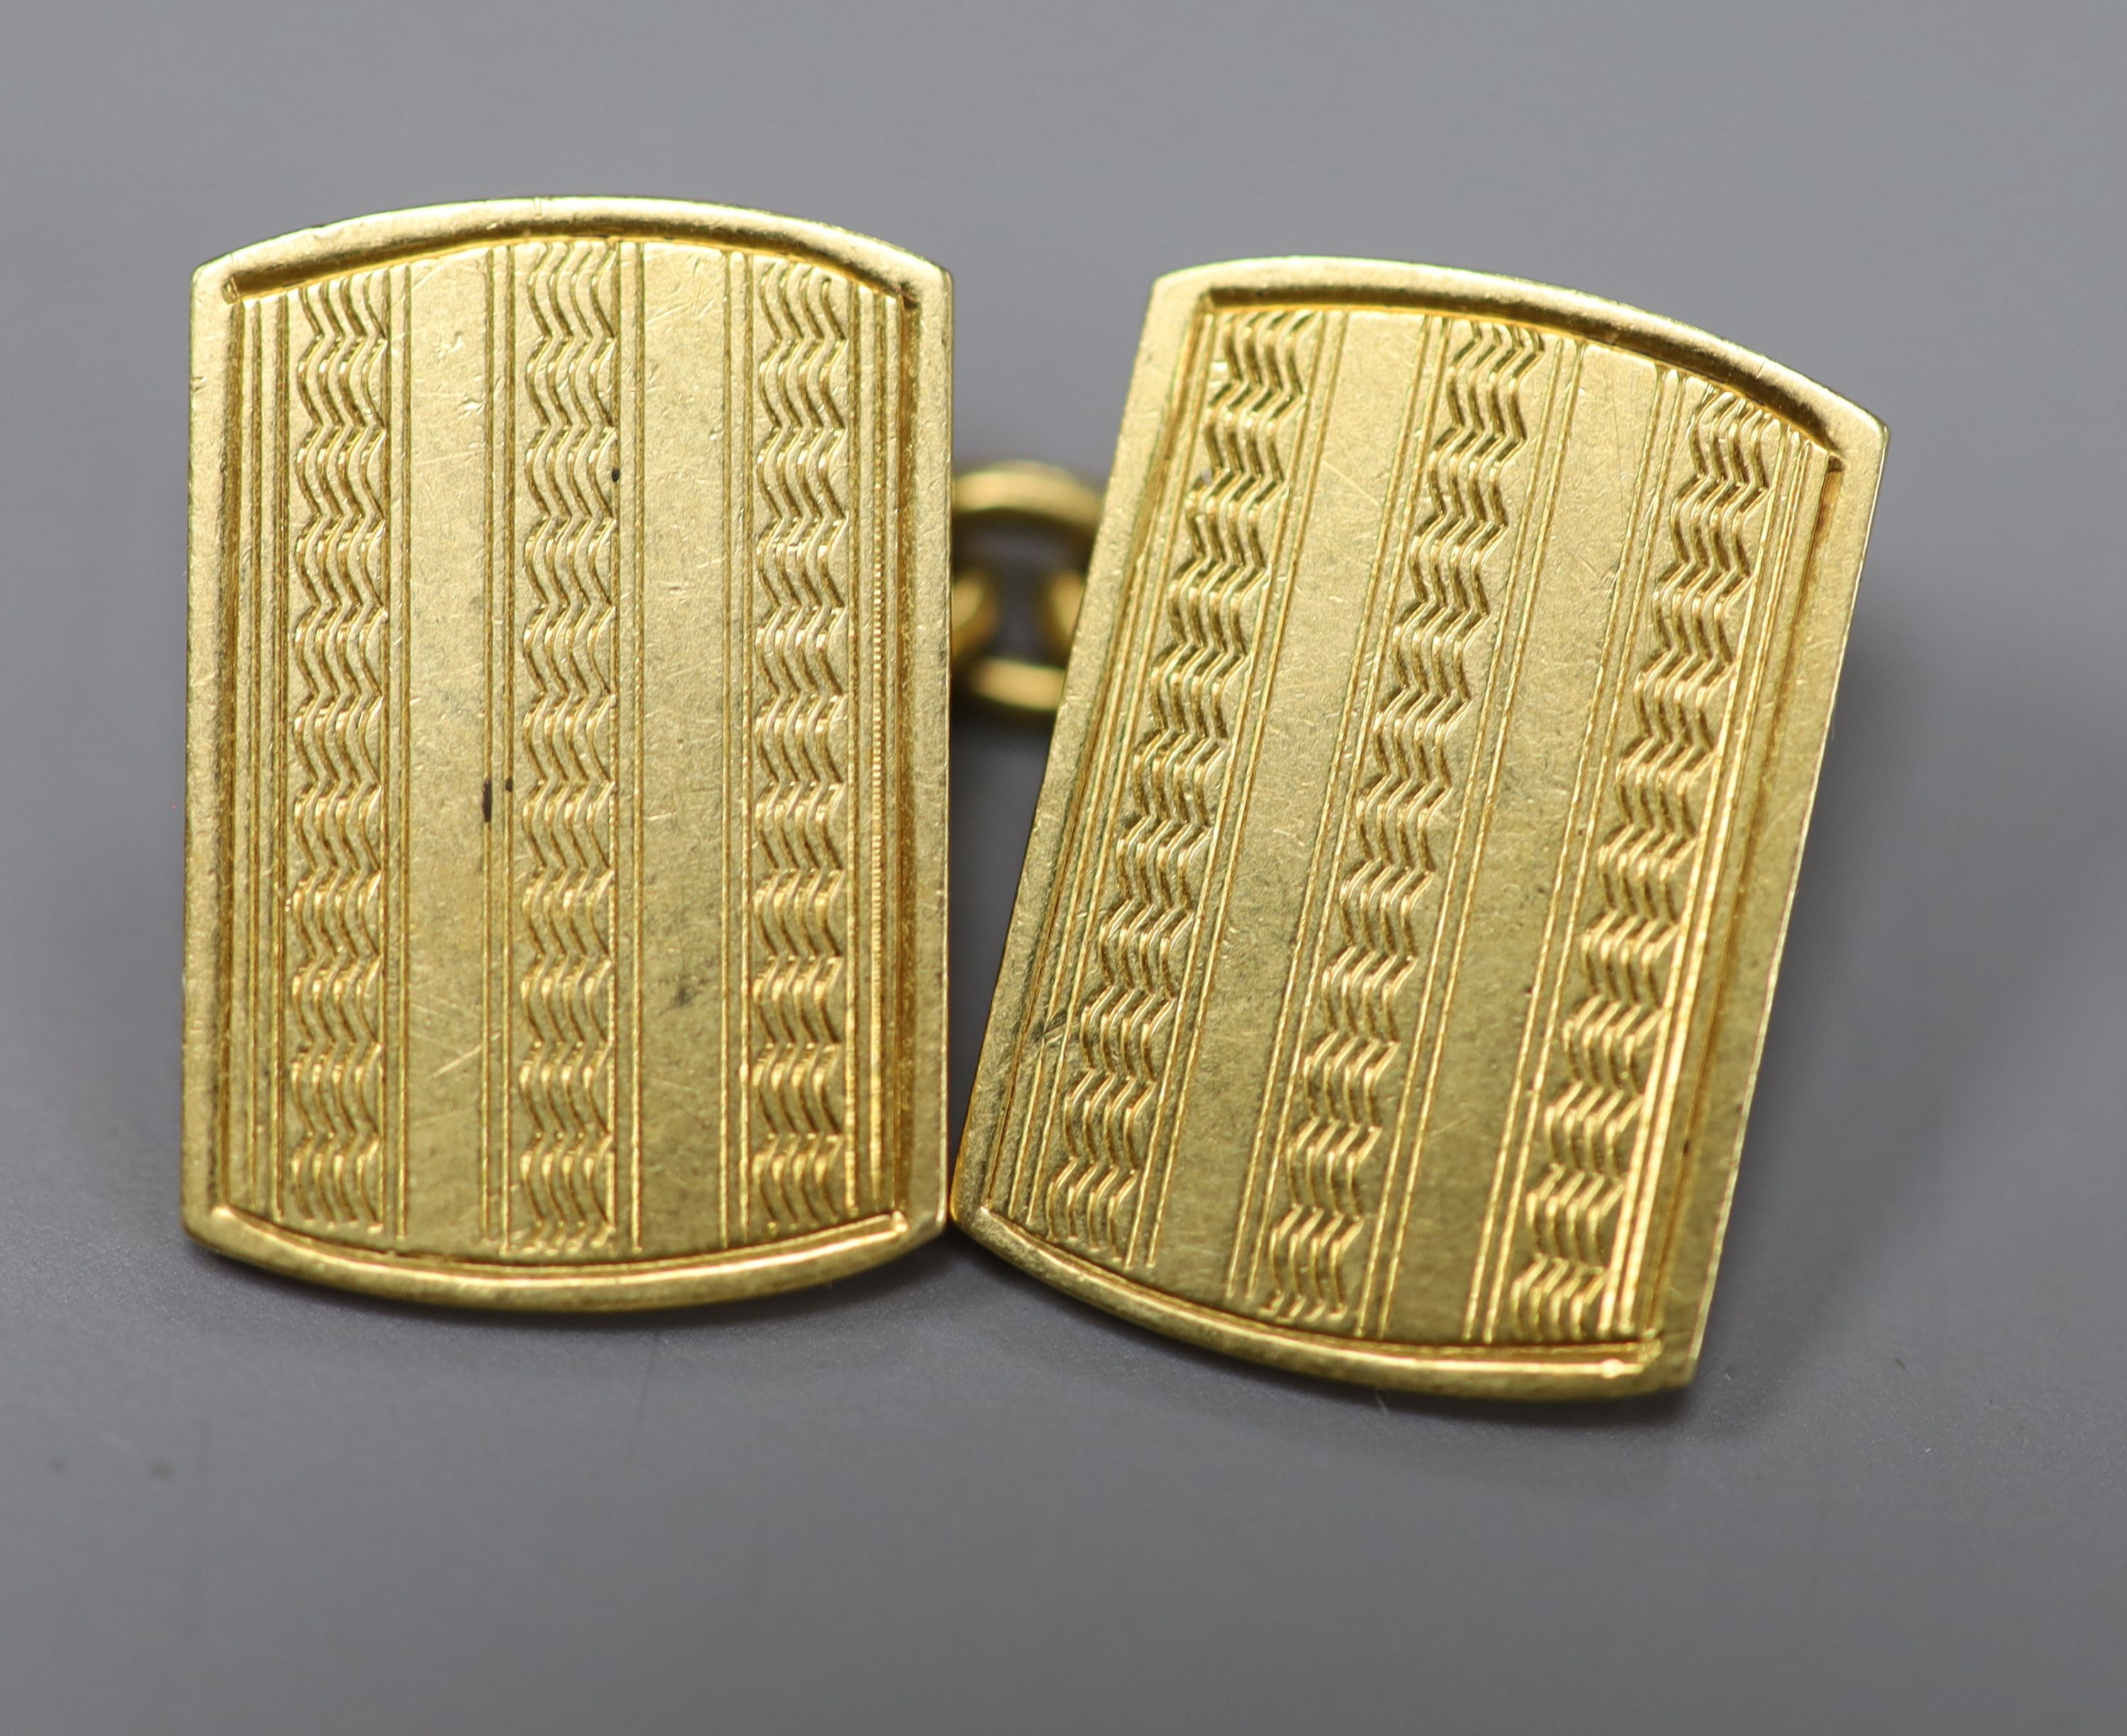 A single 18ct gold cufflink, 5 grams.